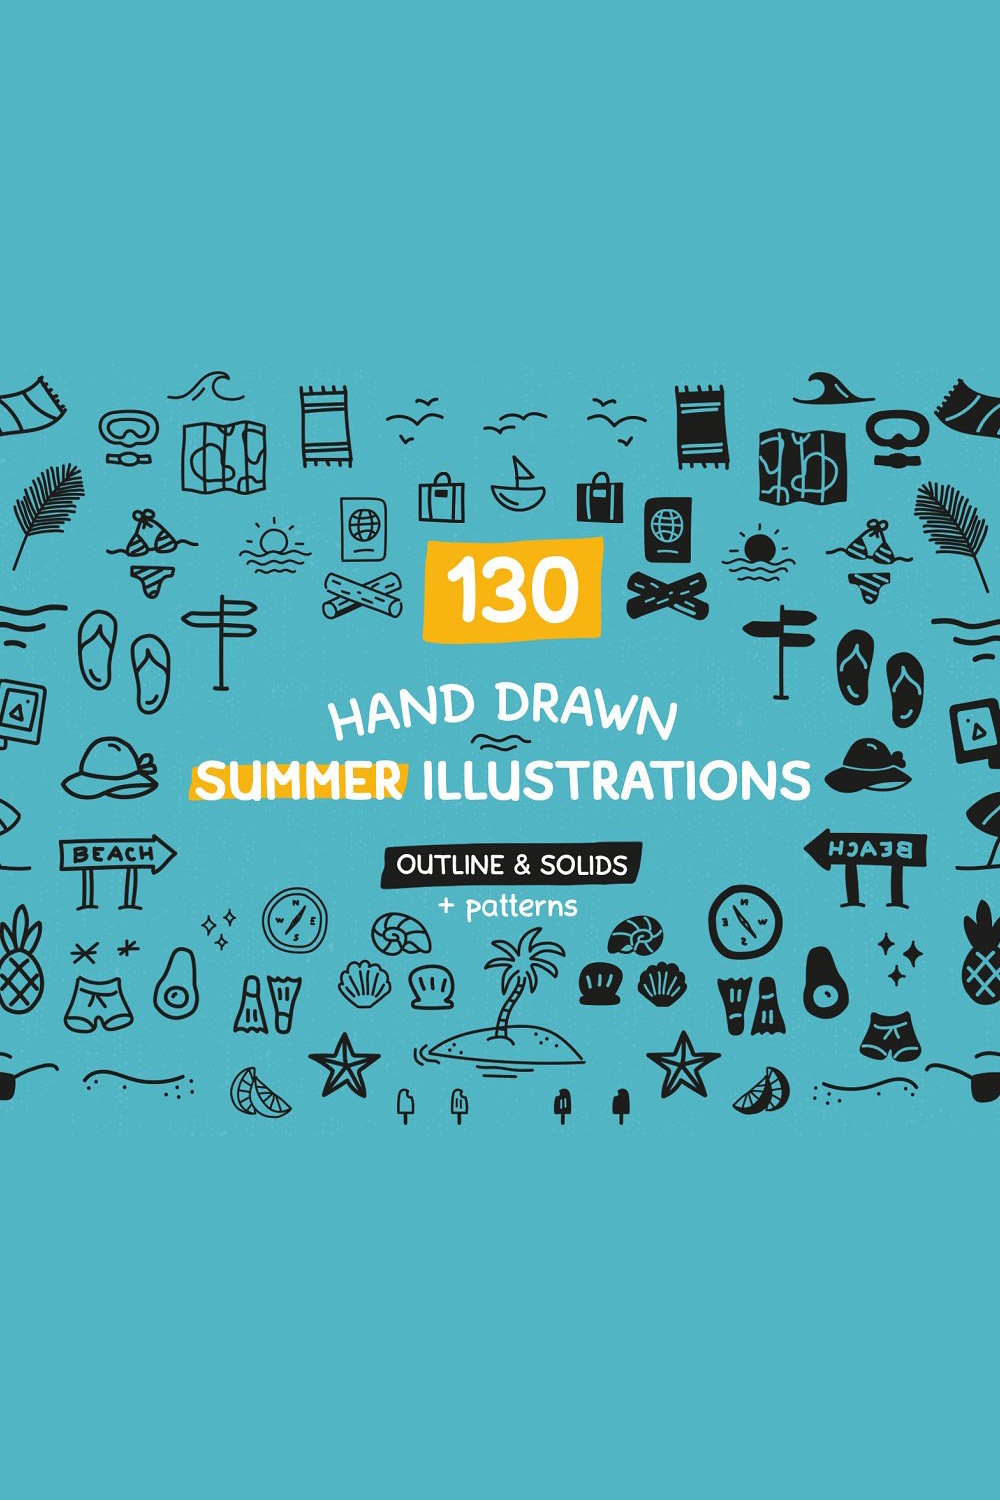 130 Summer illustrations + Patterns - pinterest image preview.